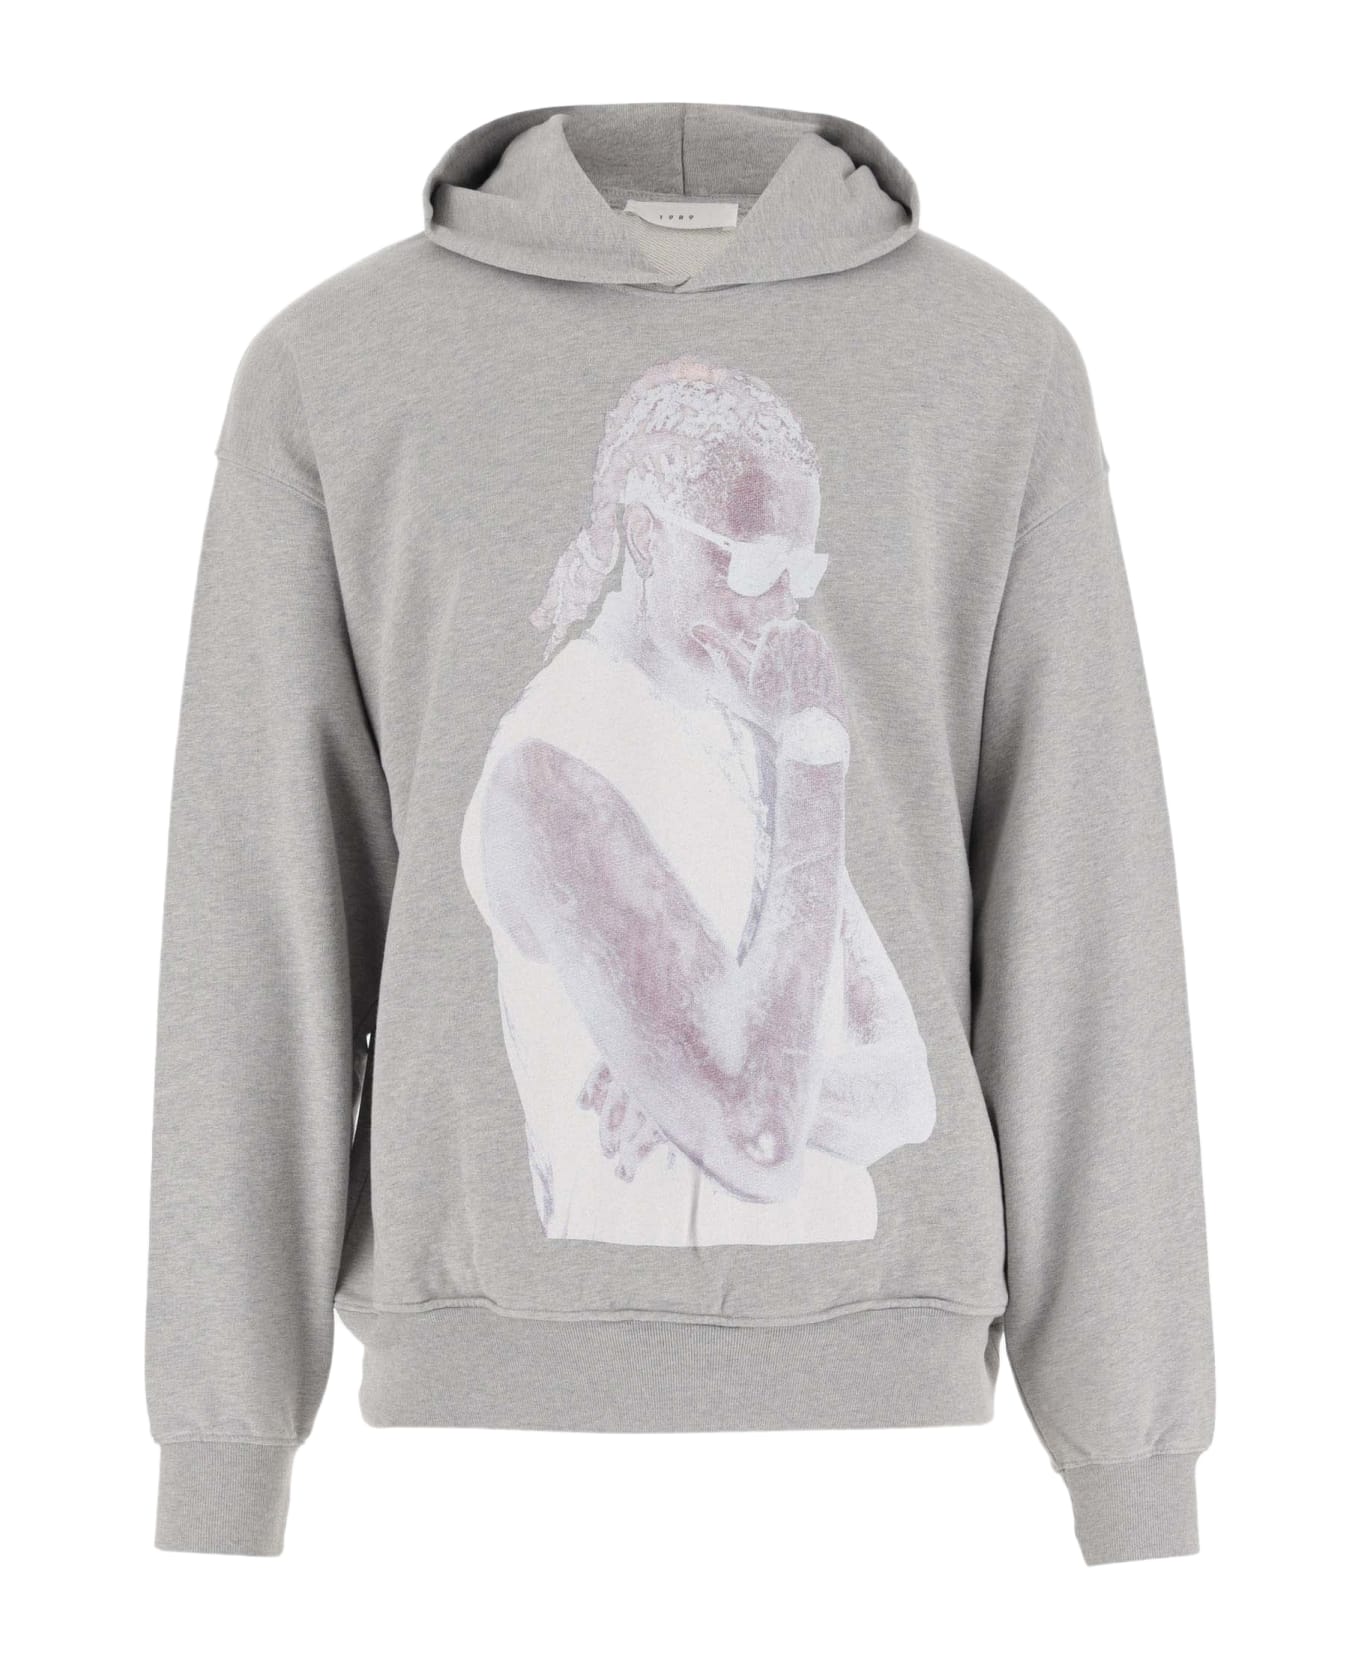 1989 Studio Cotton Sweatshirt With Print - Grey